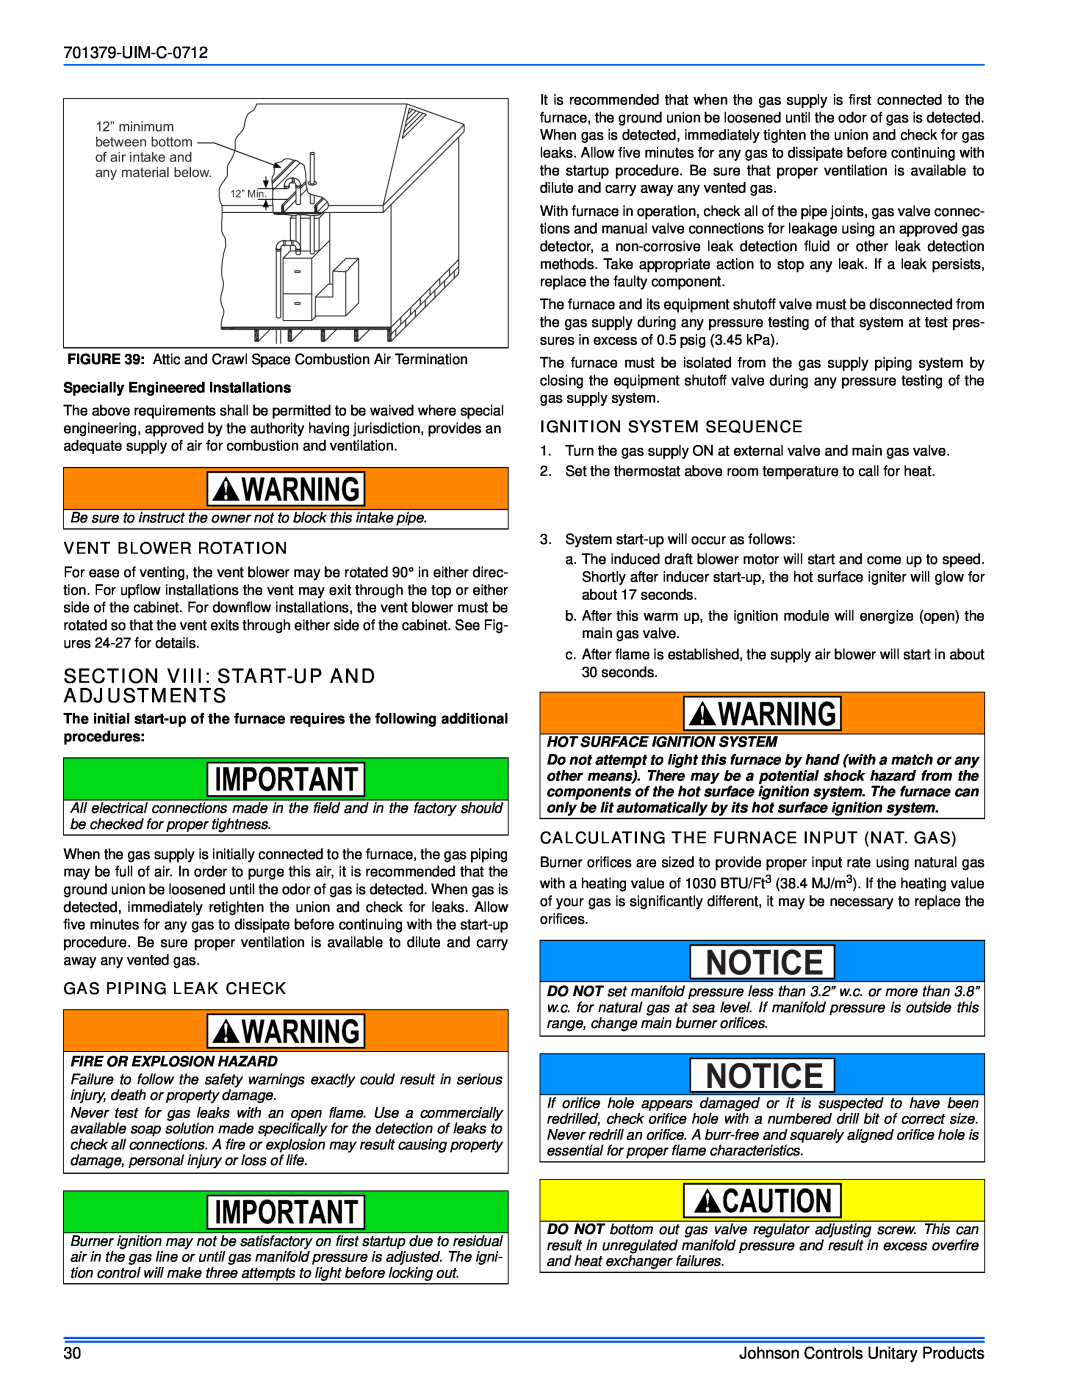 Johnson Controls TM9V*MP Section Viii Start-Upand Adjustments, UIM-C-0712, Vent Blower Rotation, Gas Piping Leak Check 